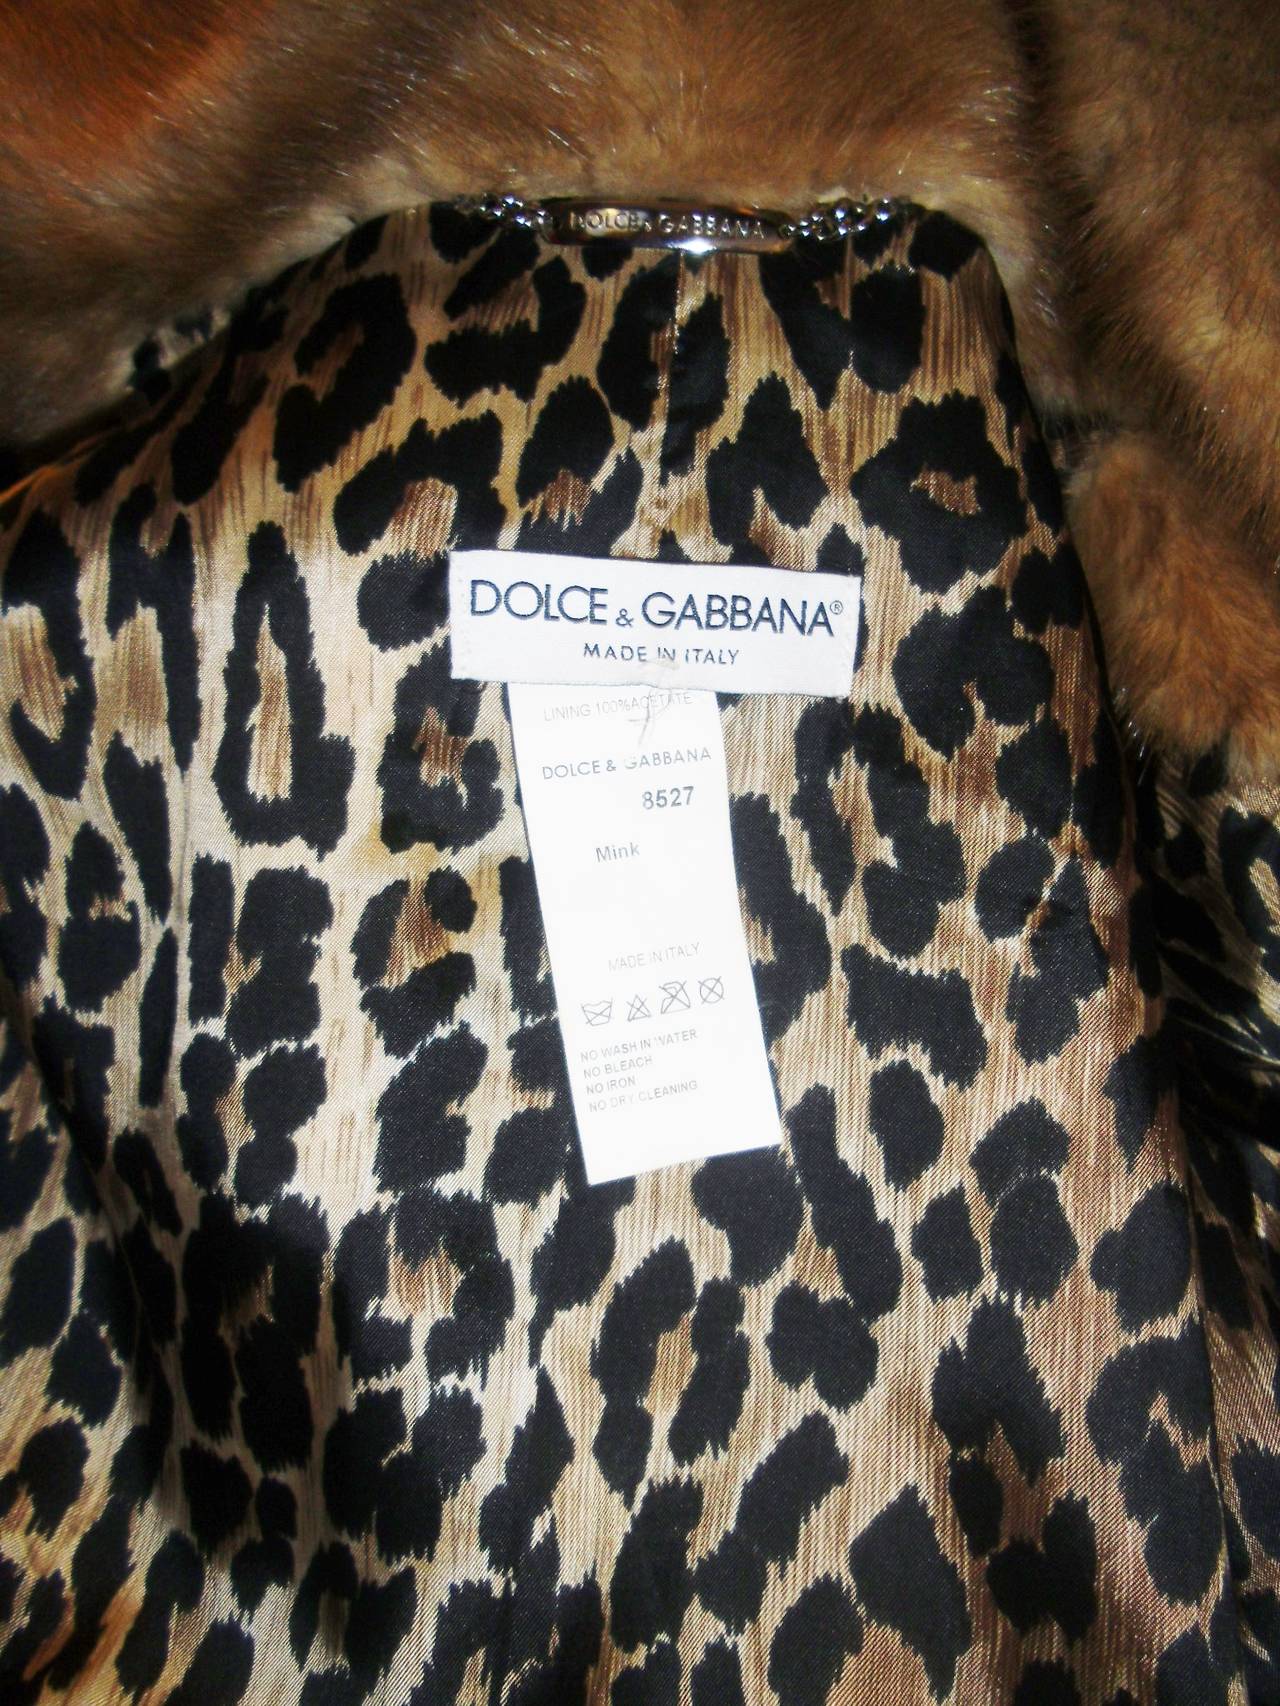 Dolce & Gabbana Cognac Mink Fur Jacket Coat Leopard Lining For Sale 1